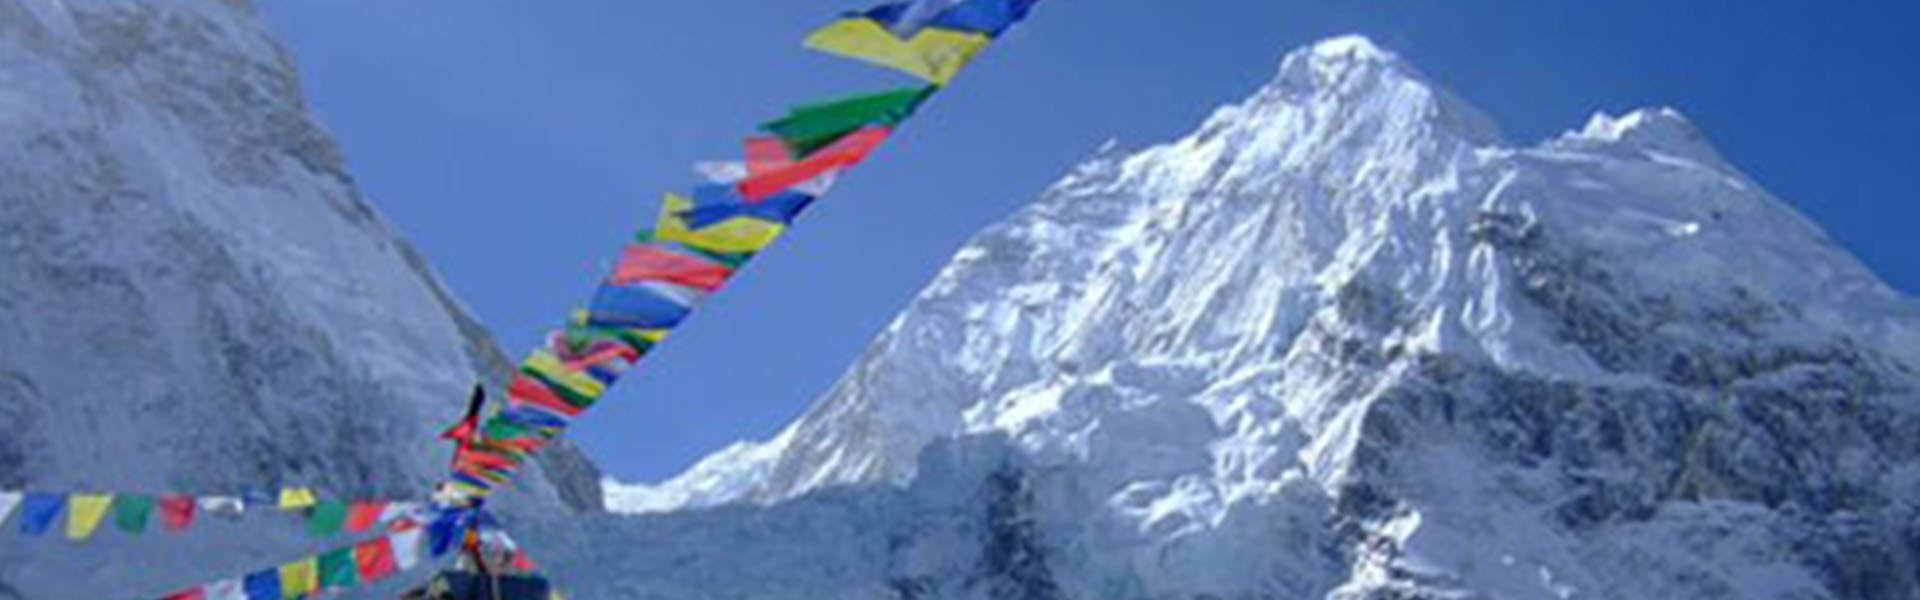 Everest Comfort Lodge Heli Trek